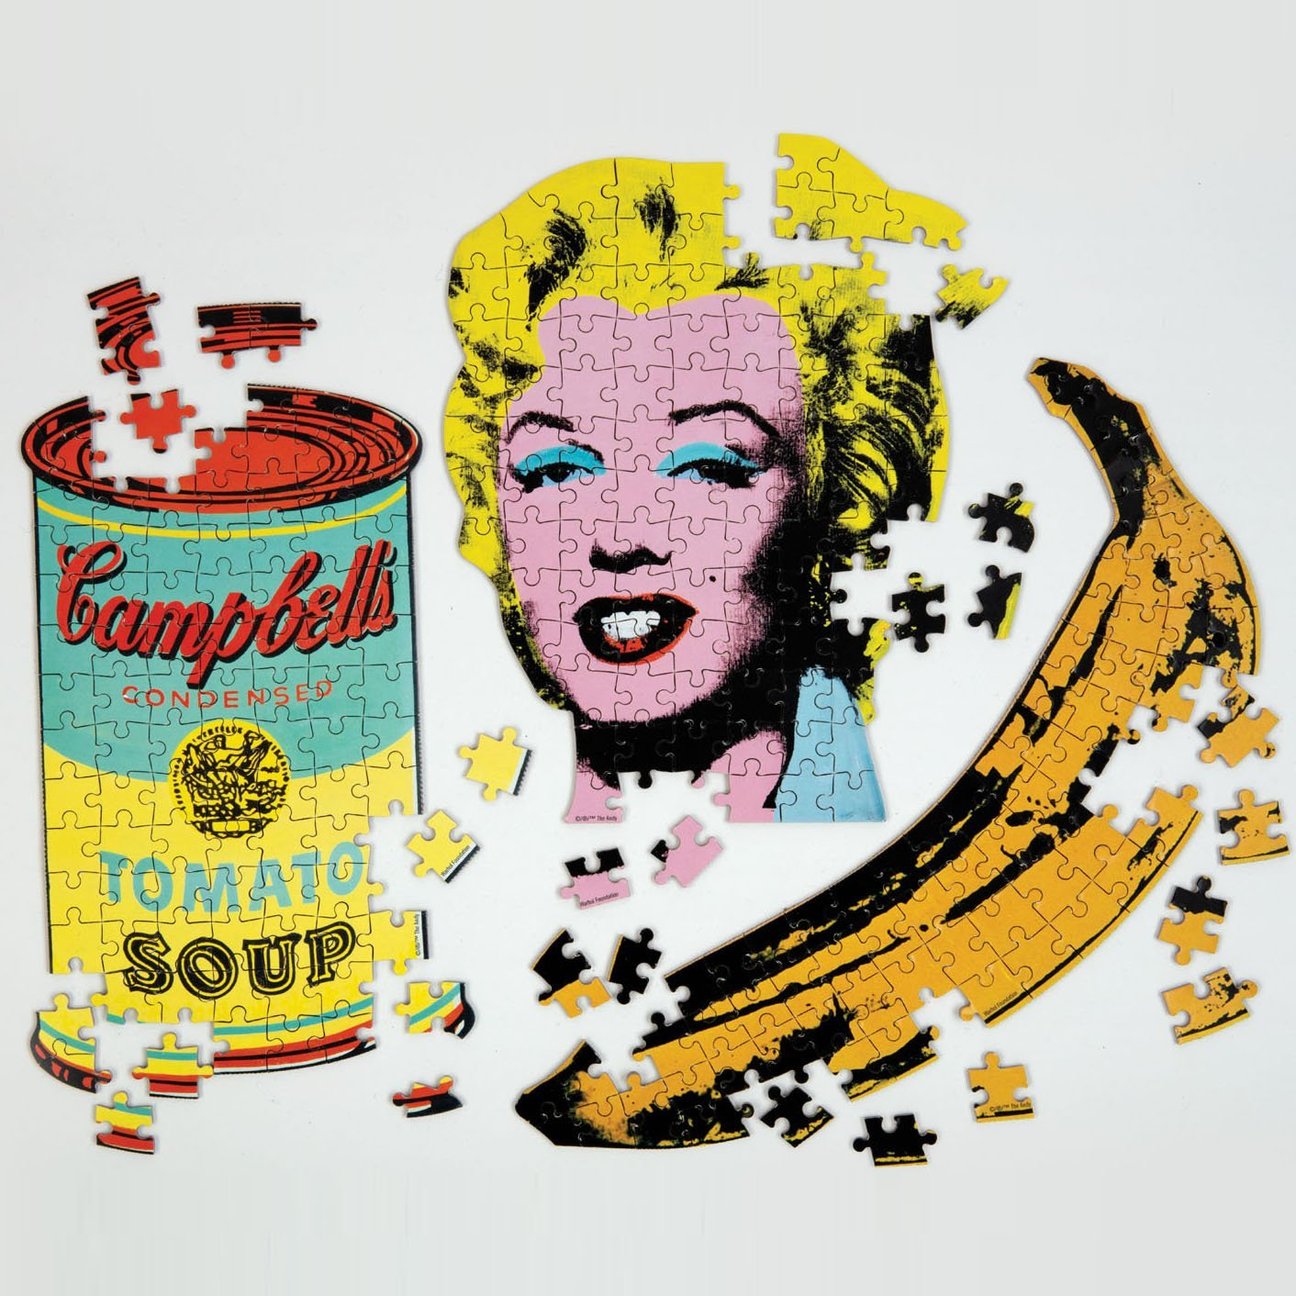 Andy Warhol: Marilyn Monroe Mini Shaped Puzzle